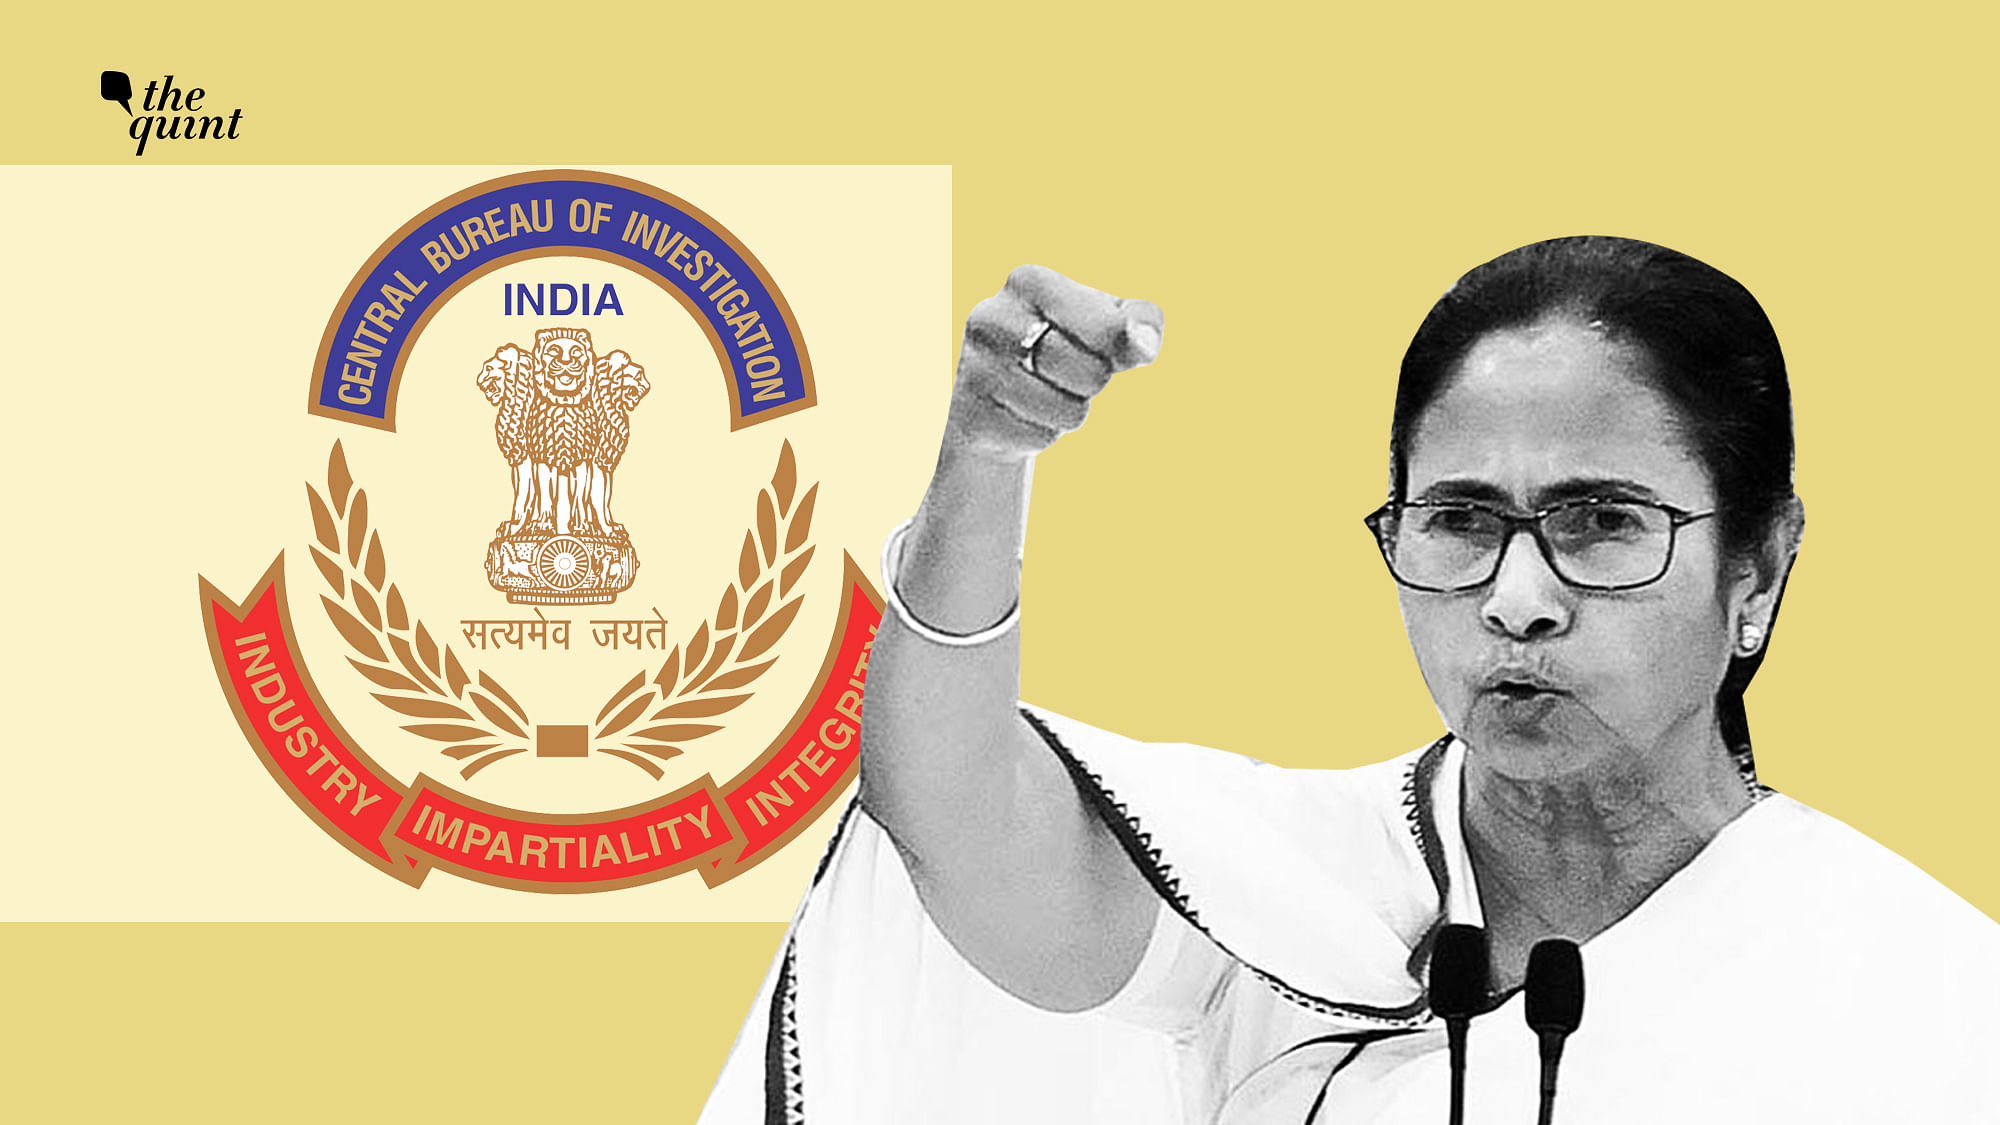 Image of Mamata Banerjee and logo of the CBI used for representational purposes.